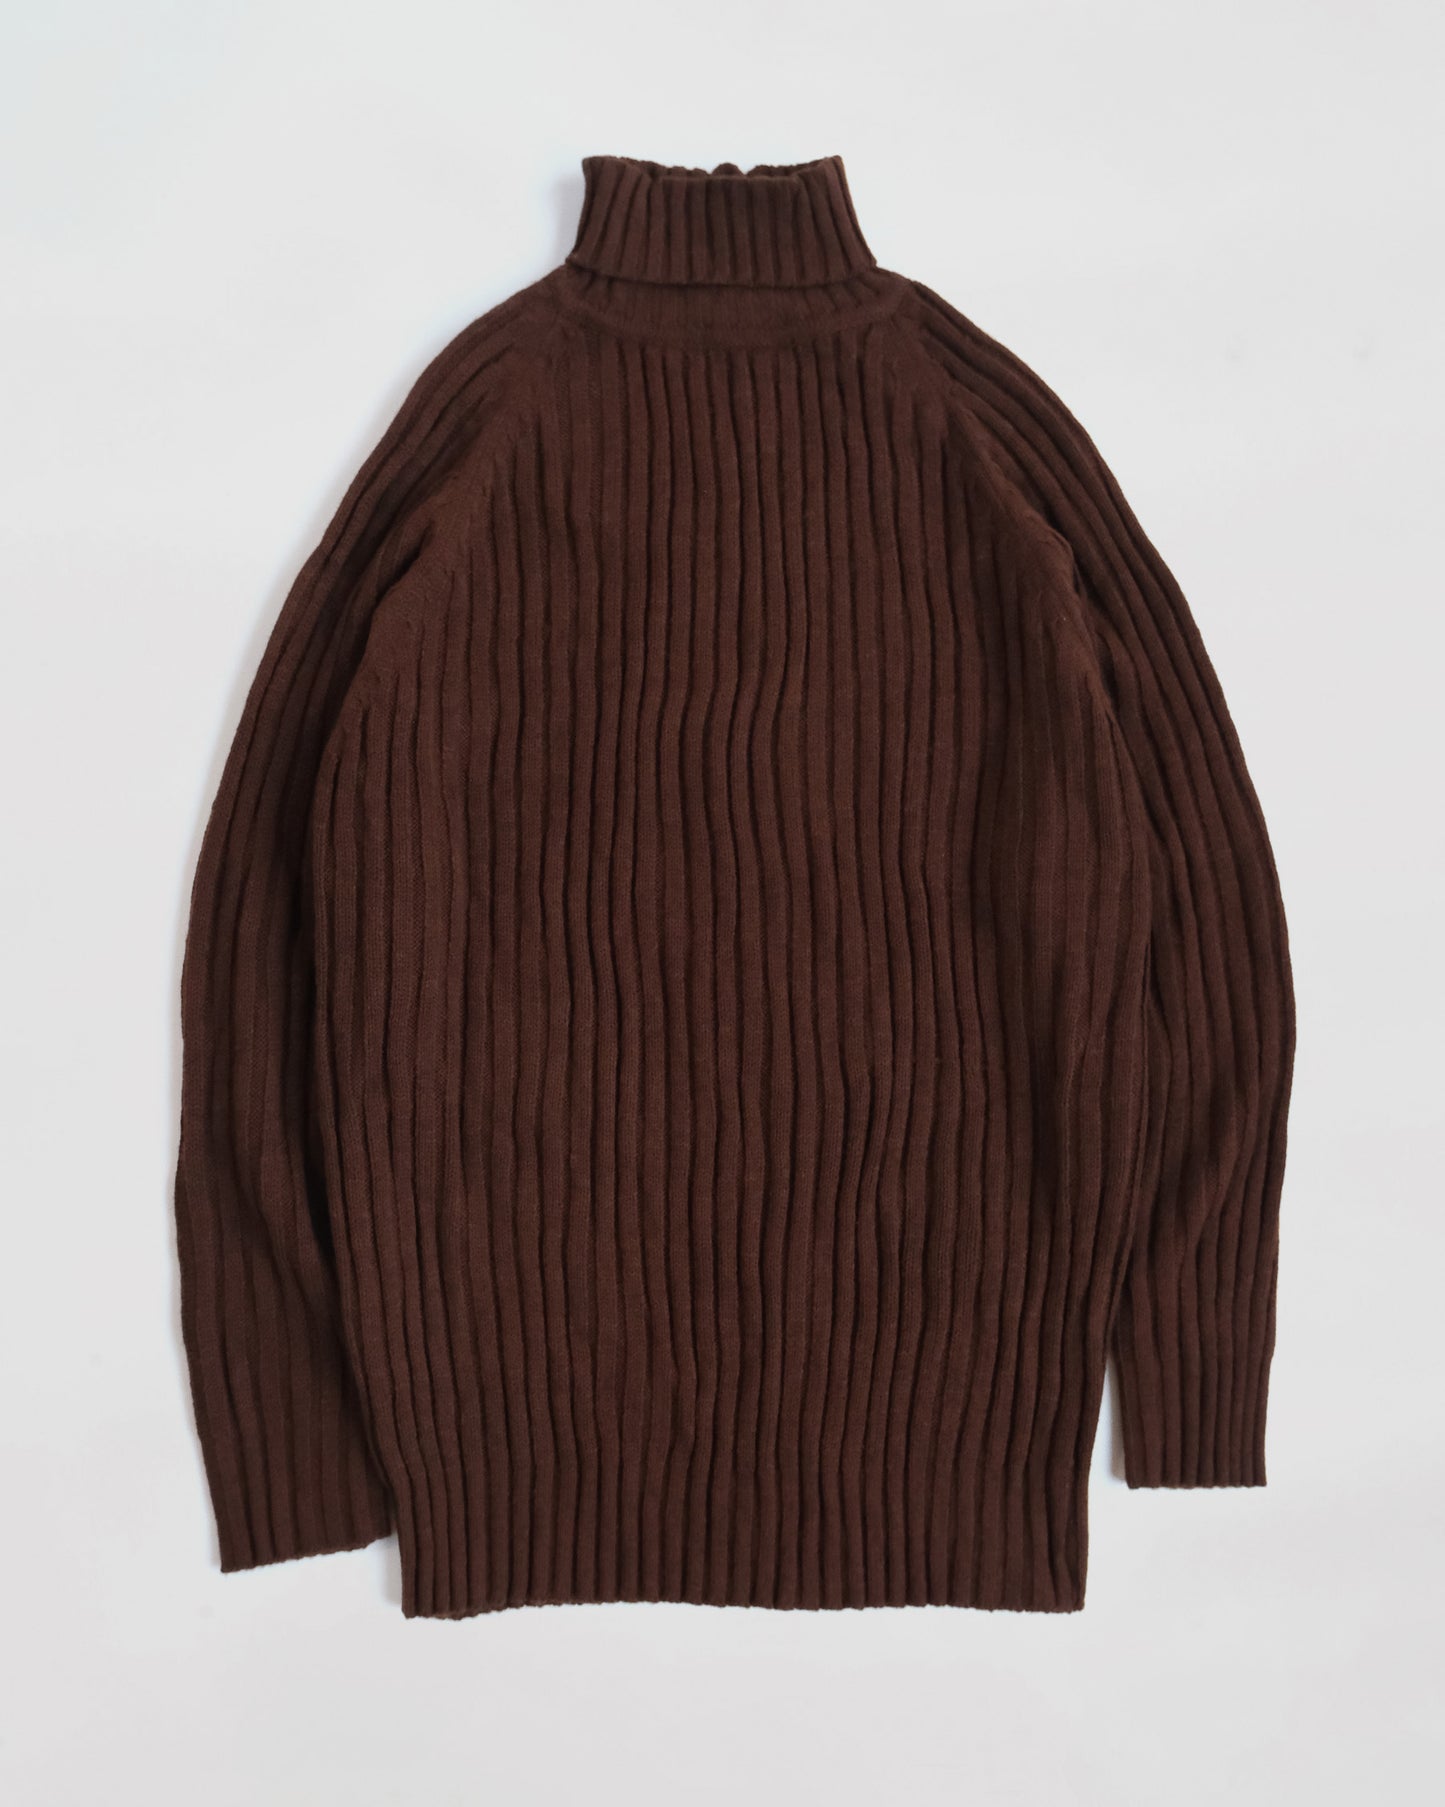 NOS Turtleneck Sweater Brown